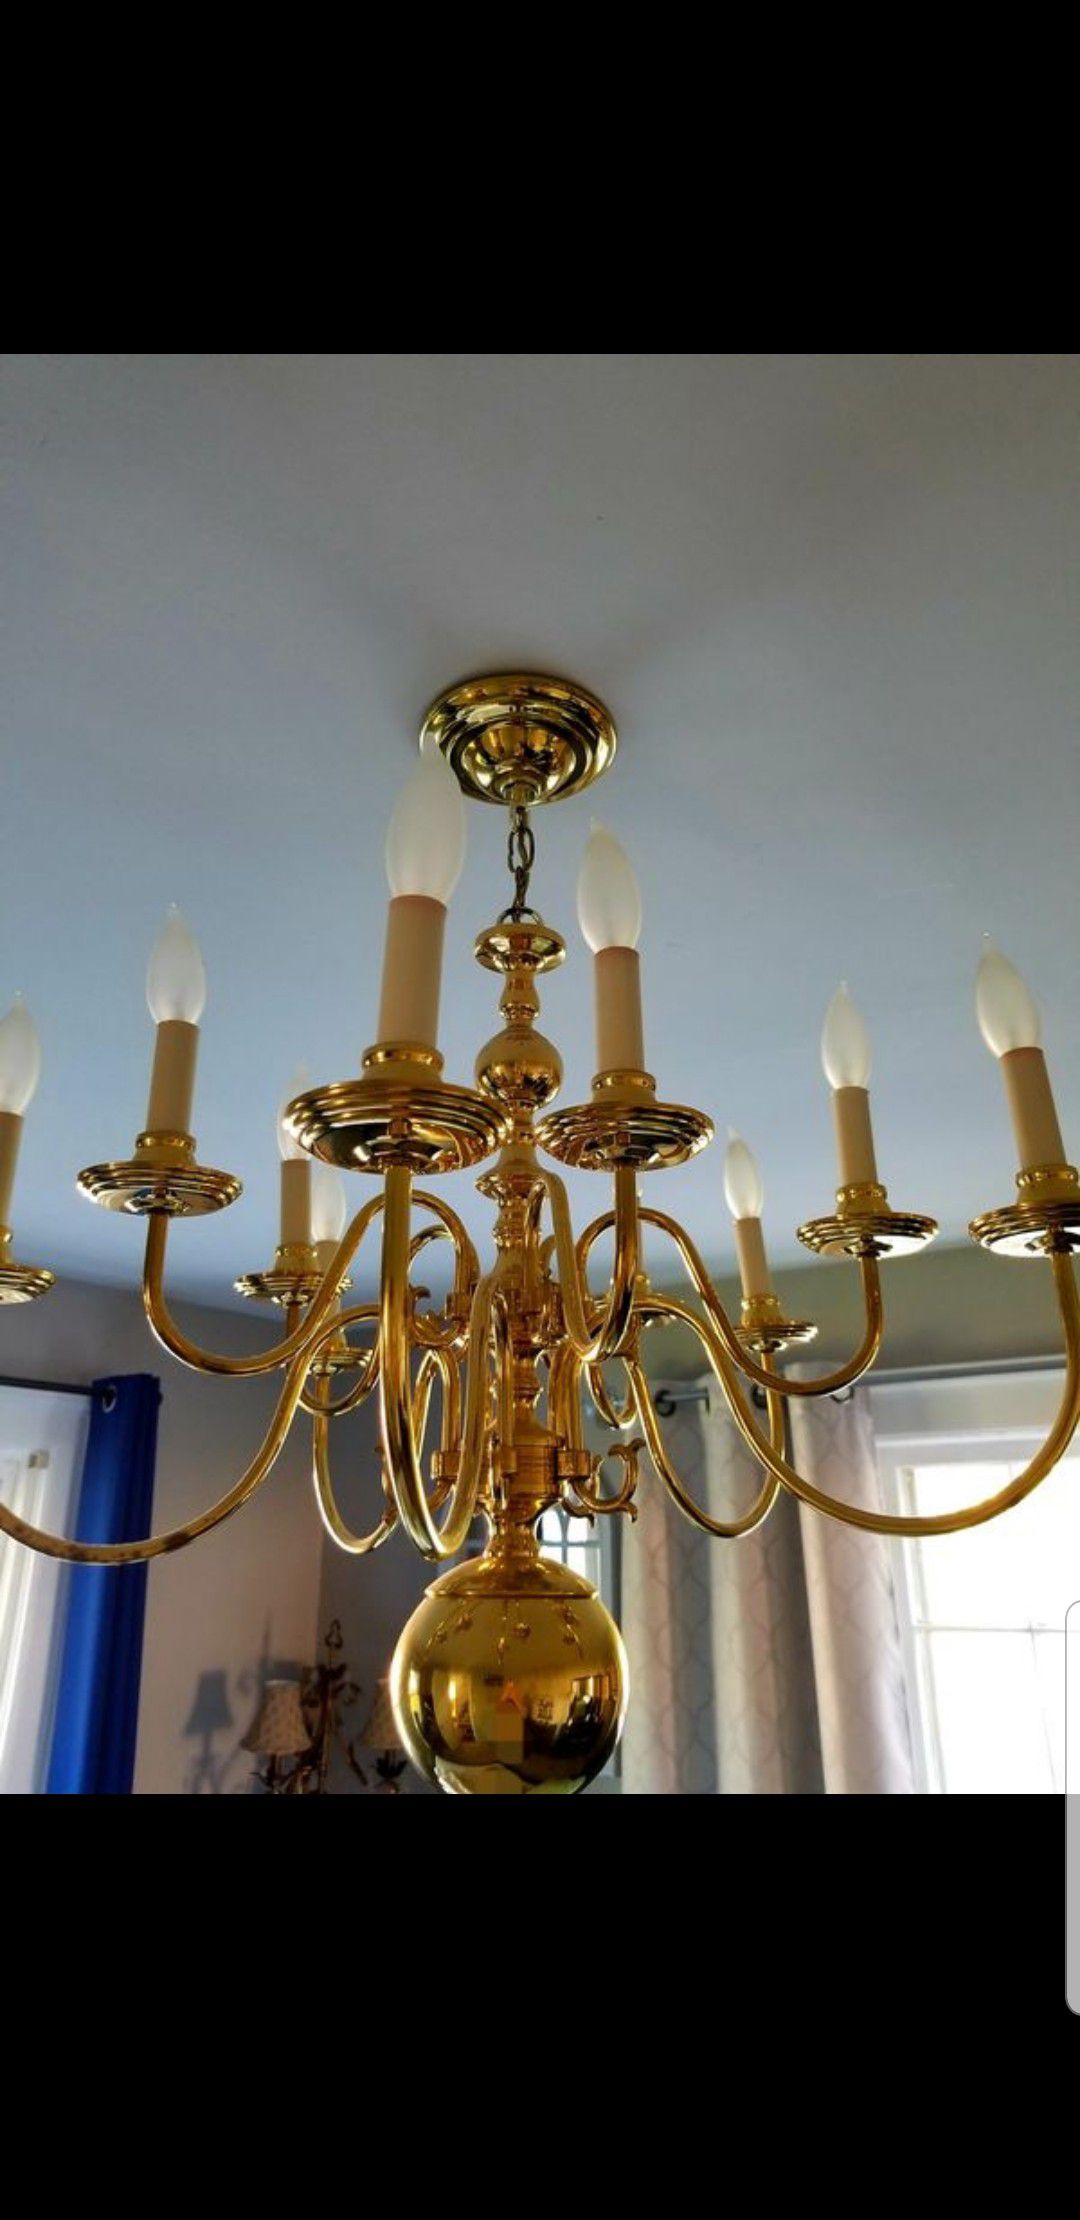 Large beautiful chandelier